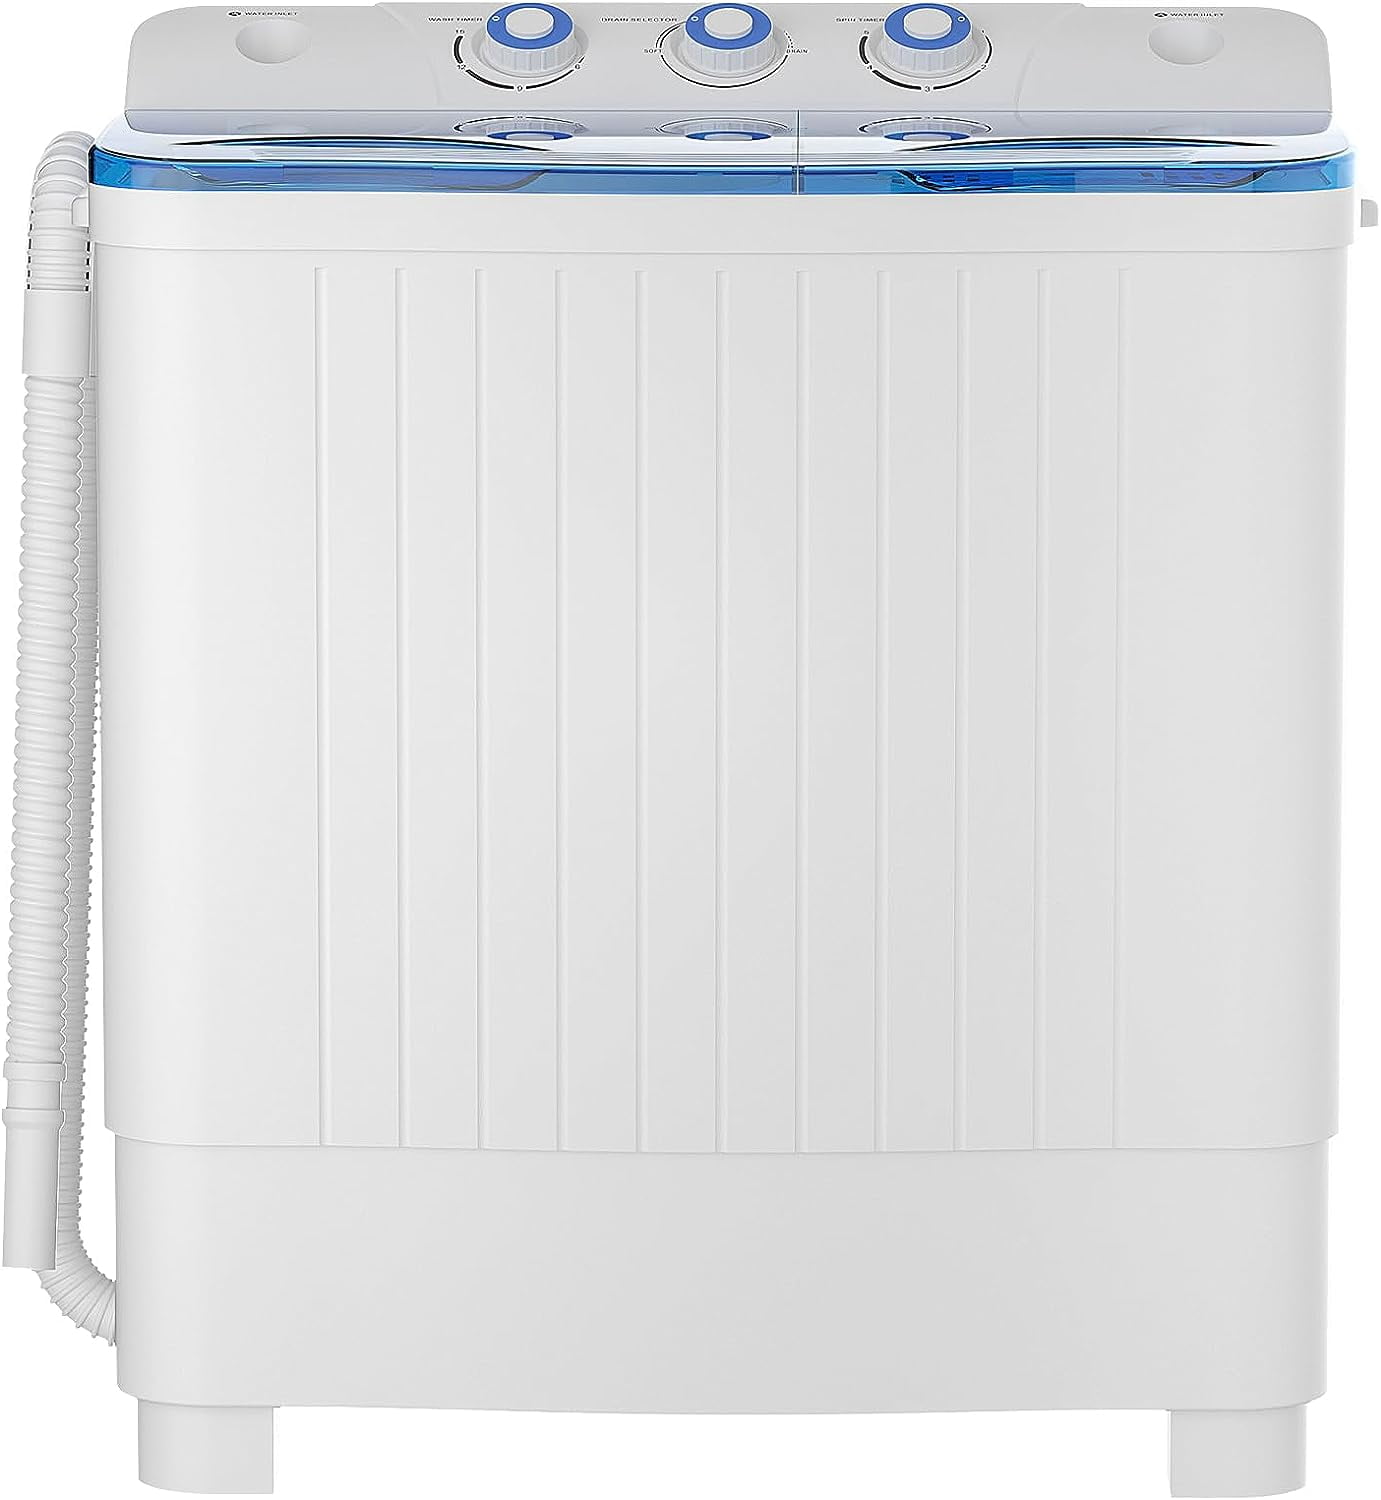 Giantex Twin Tub Portable Mini Washing Machine Washer 13.2